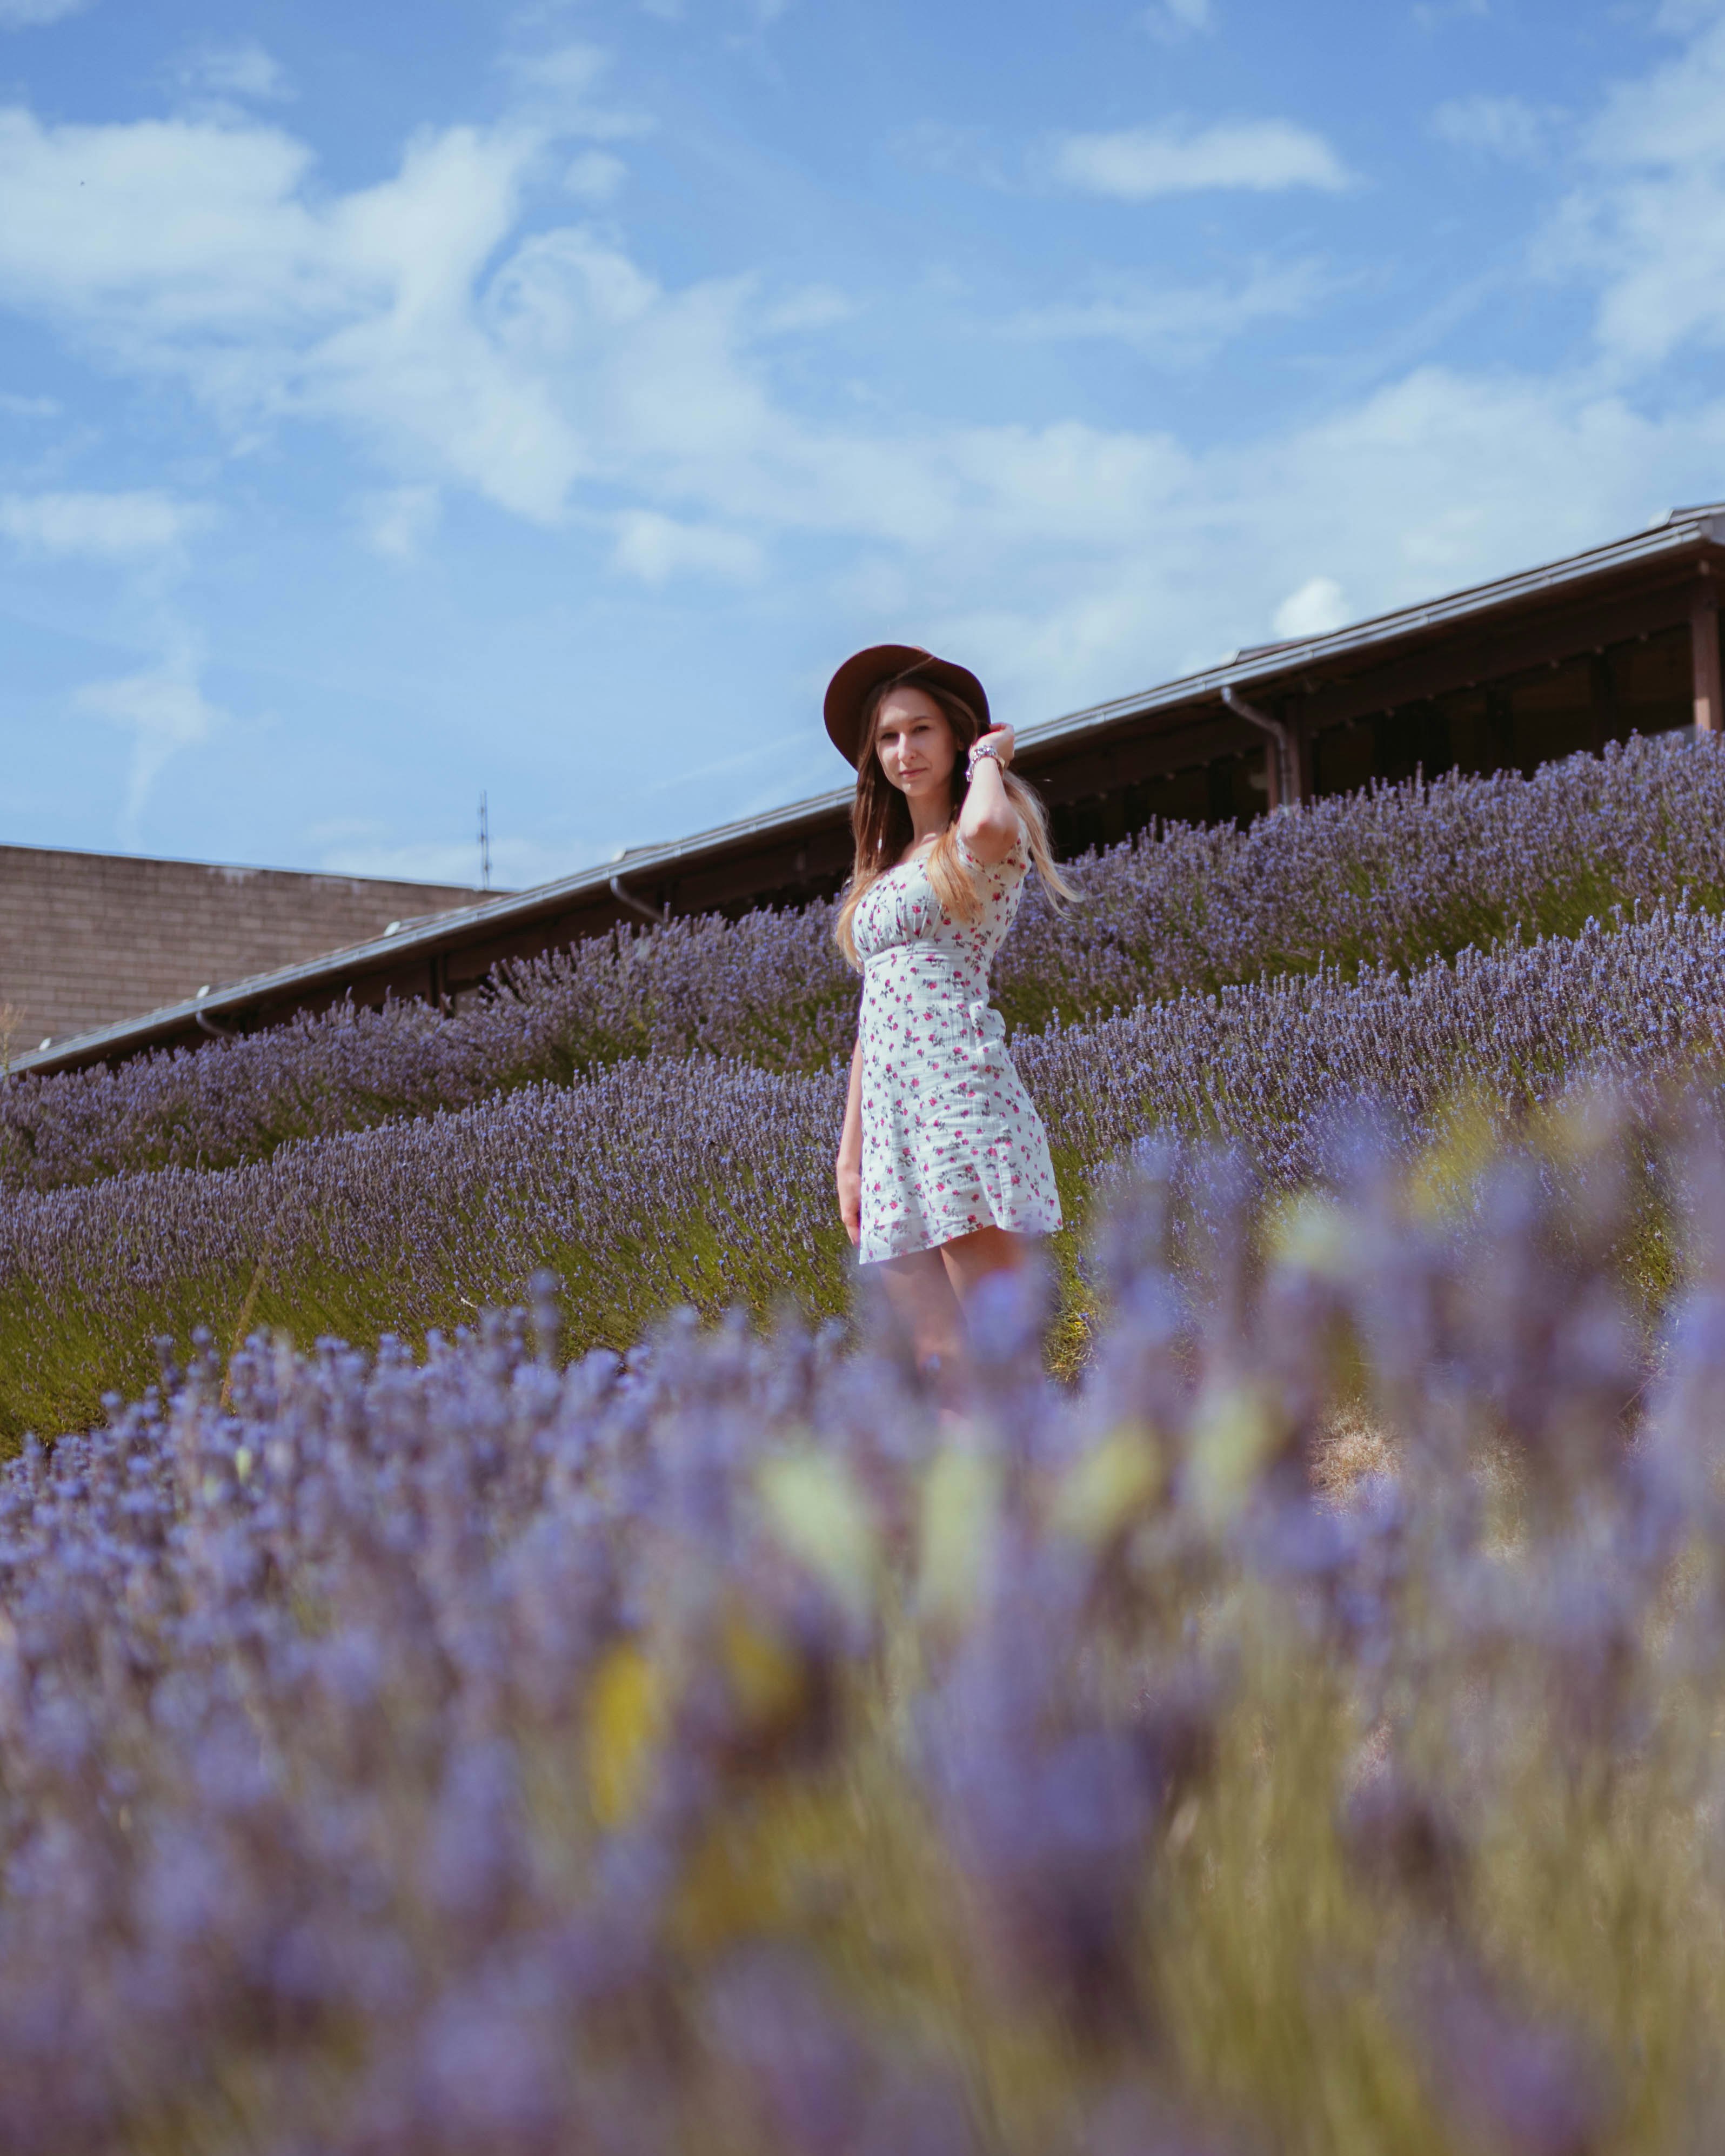 girl in white dress standing on purple flower field during daytime